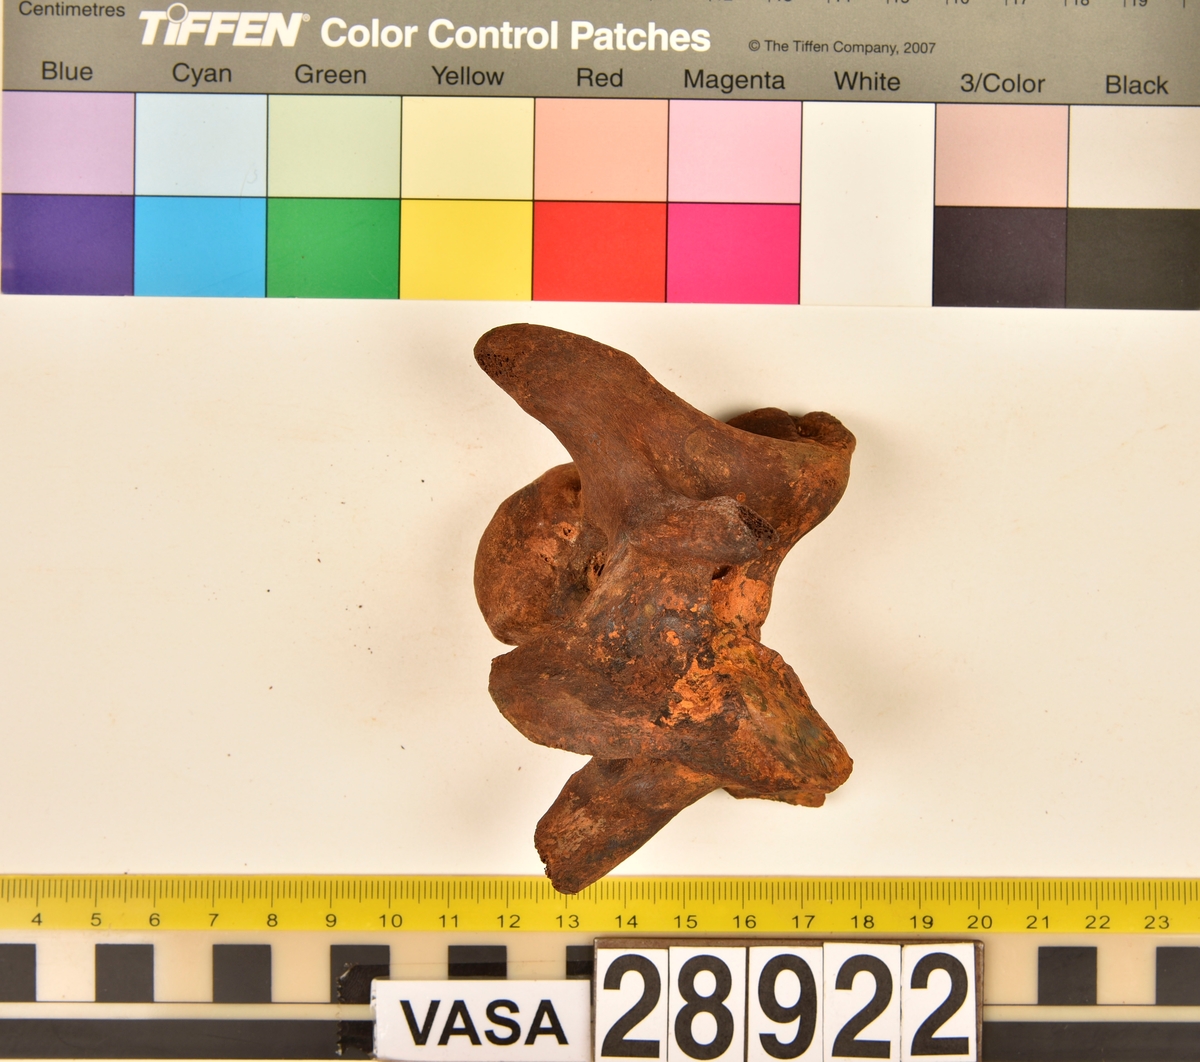 Ben från nötkreatur (Bos taurus).
1 st. halskota (vertebrae cervicale).
5 st. revben (costae).